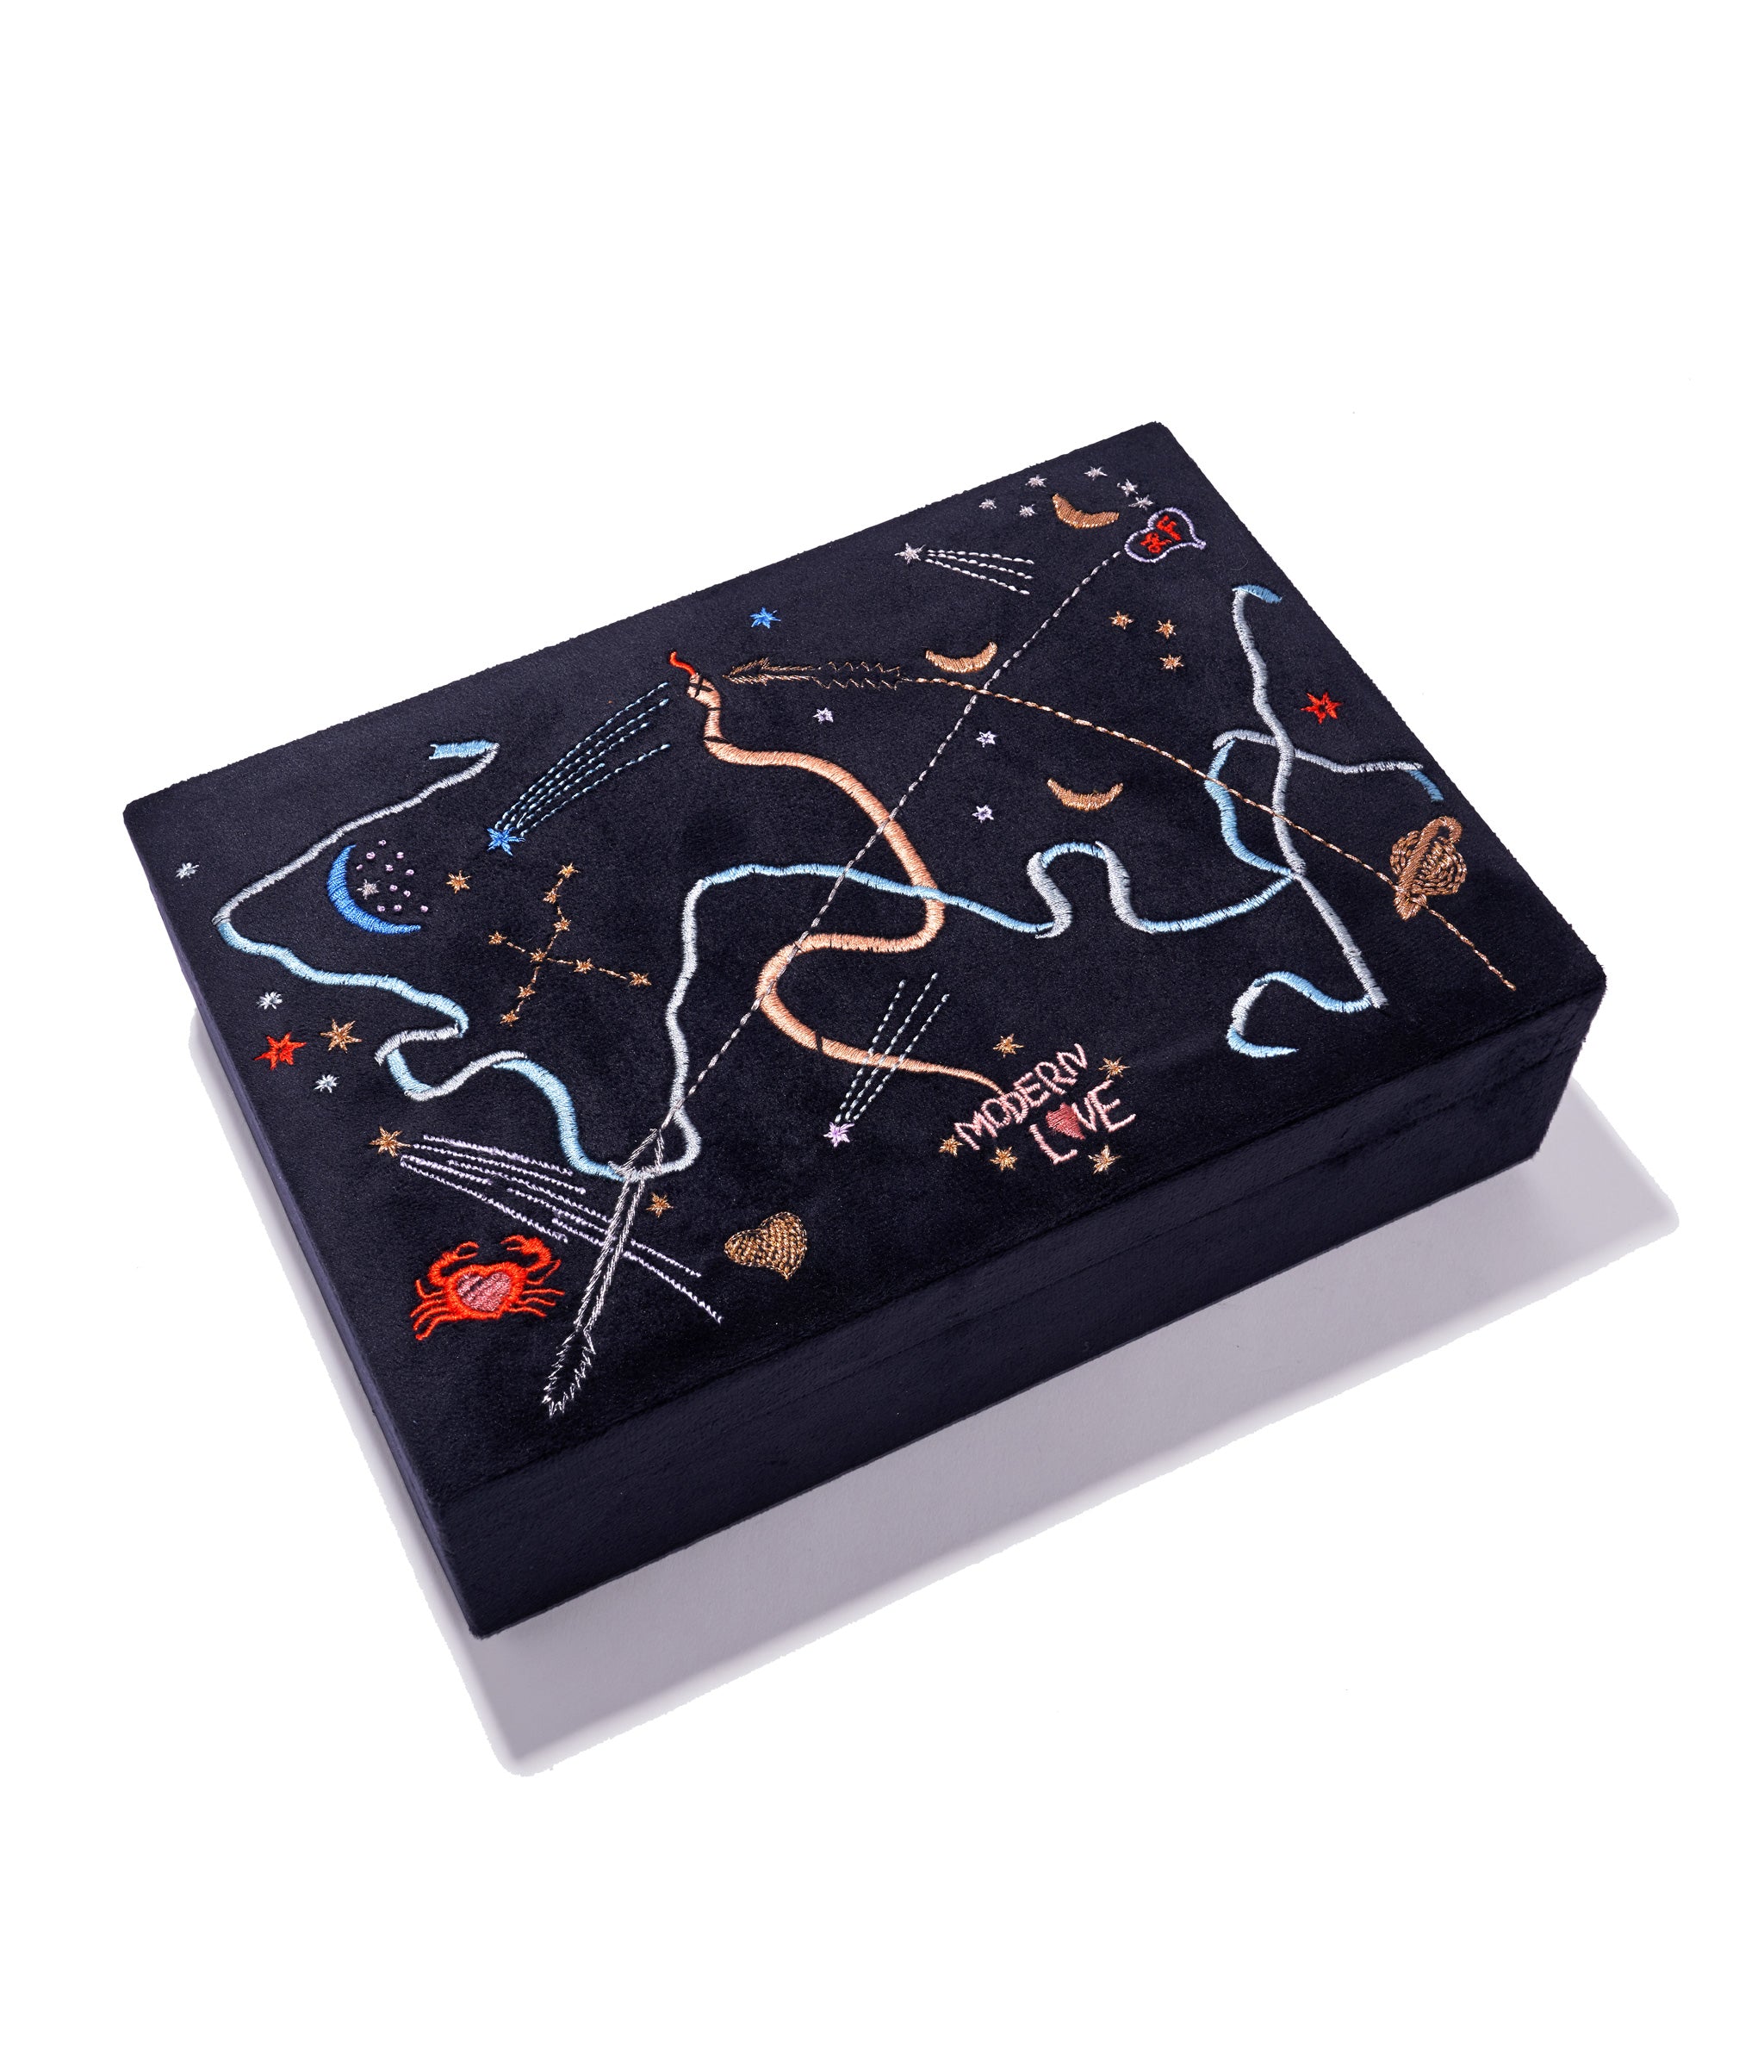 Modern Love Jewelry Box.  Black velvet and satin rectangular storage box, embroidered with zodiac-inspired illustrations.